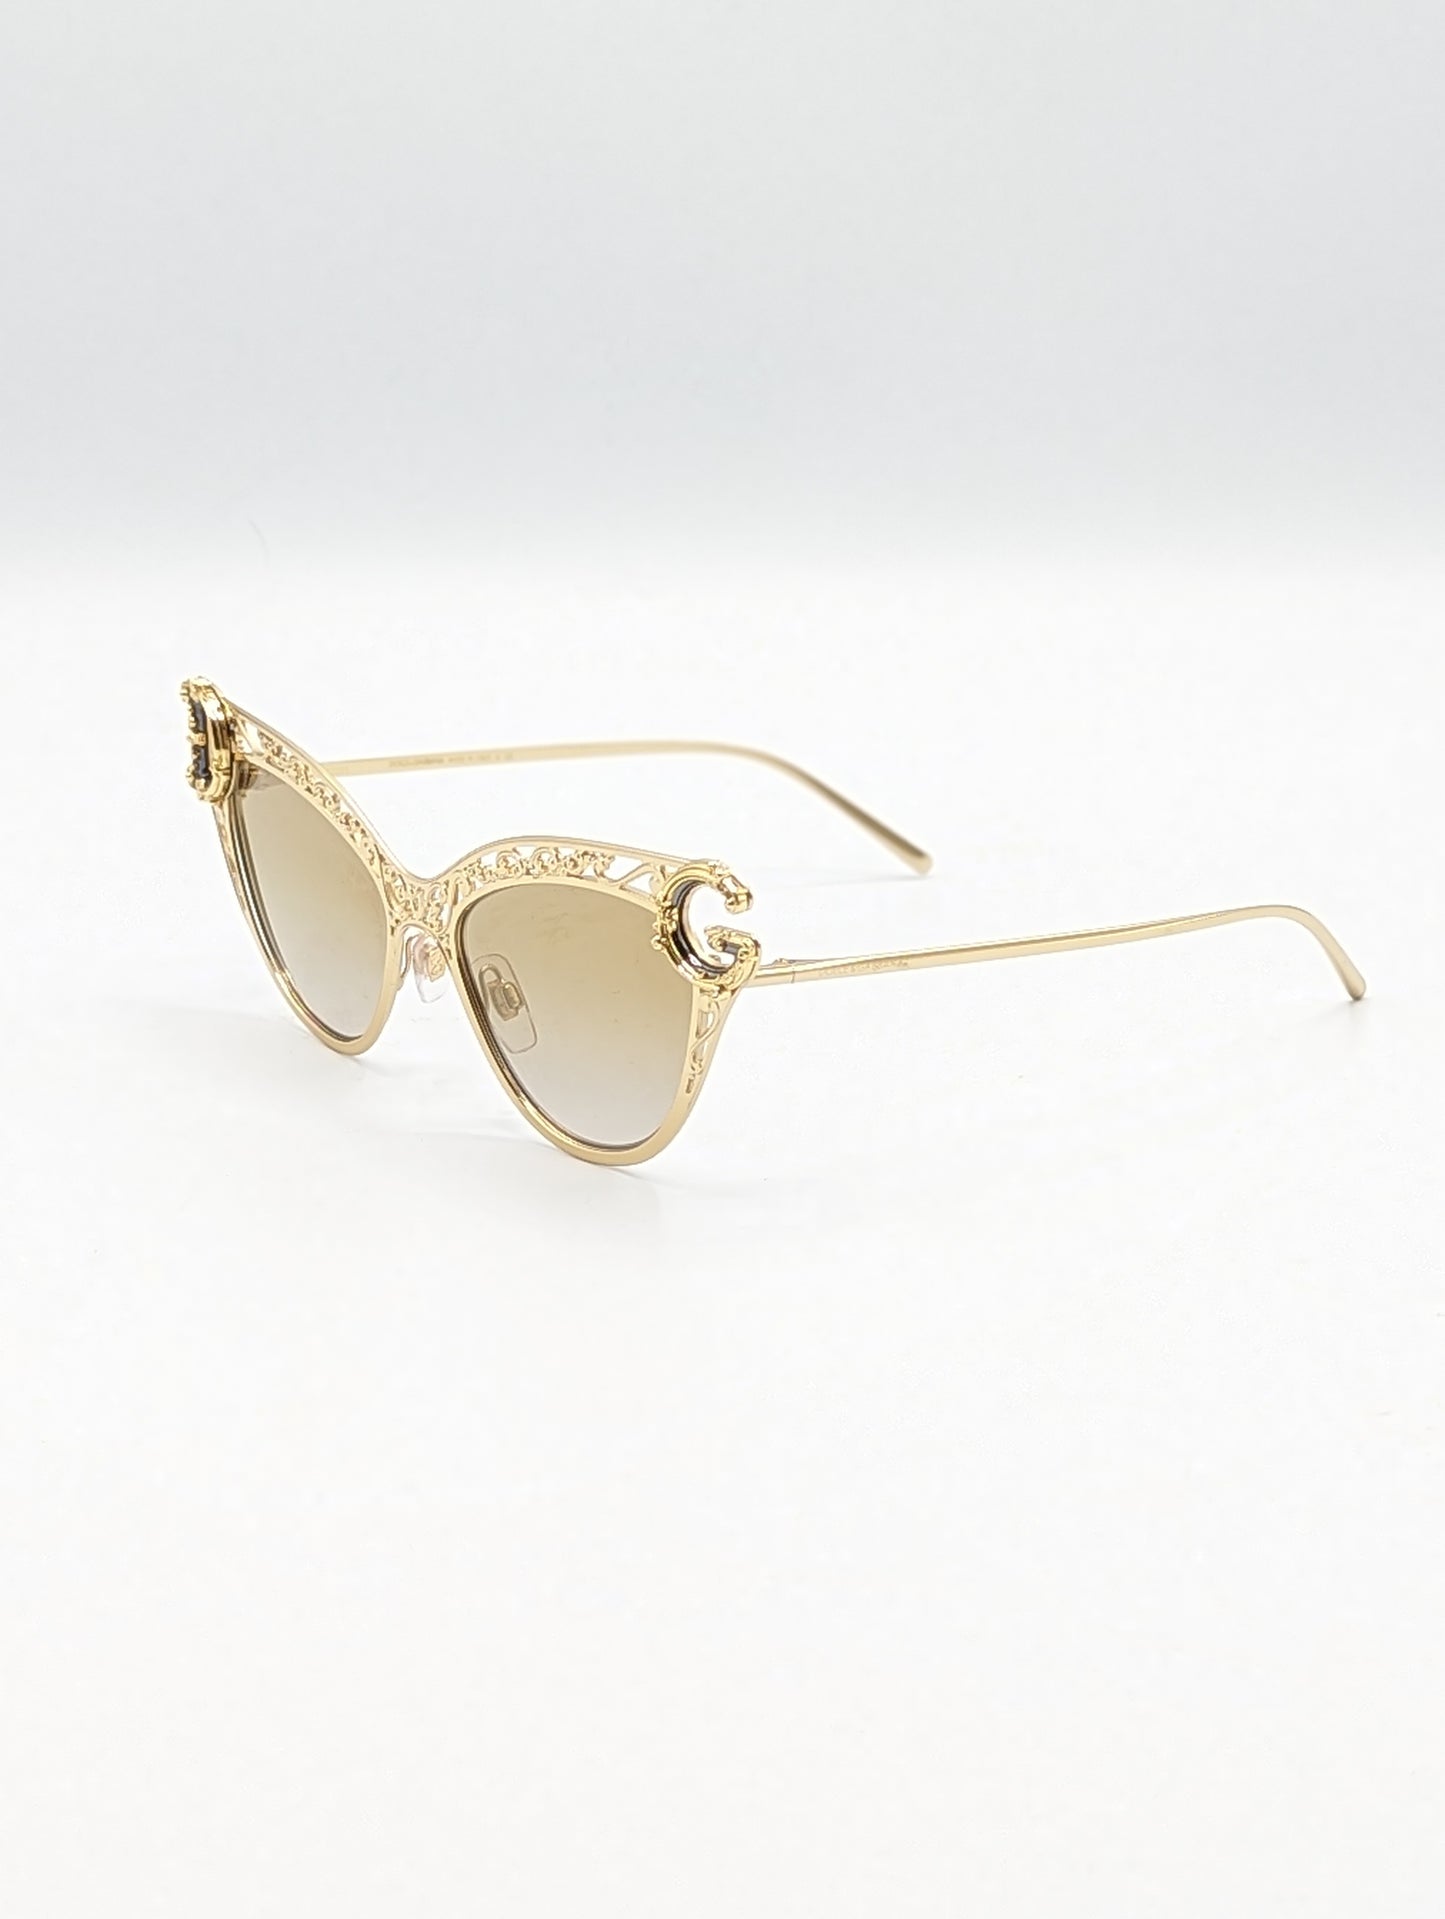 Dolce & Gabbana Gold Baroque Sunglasses DG 2239 Spring 2019